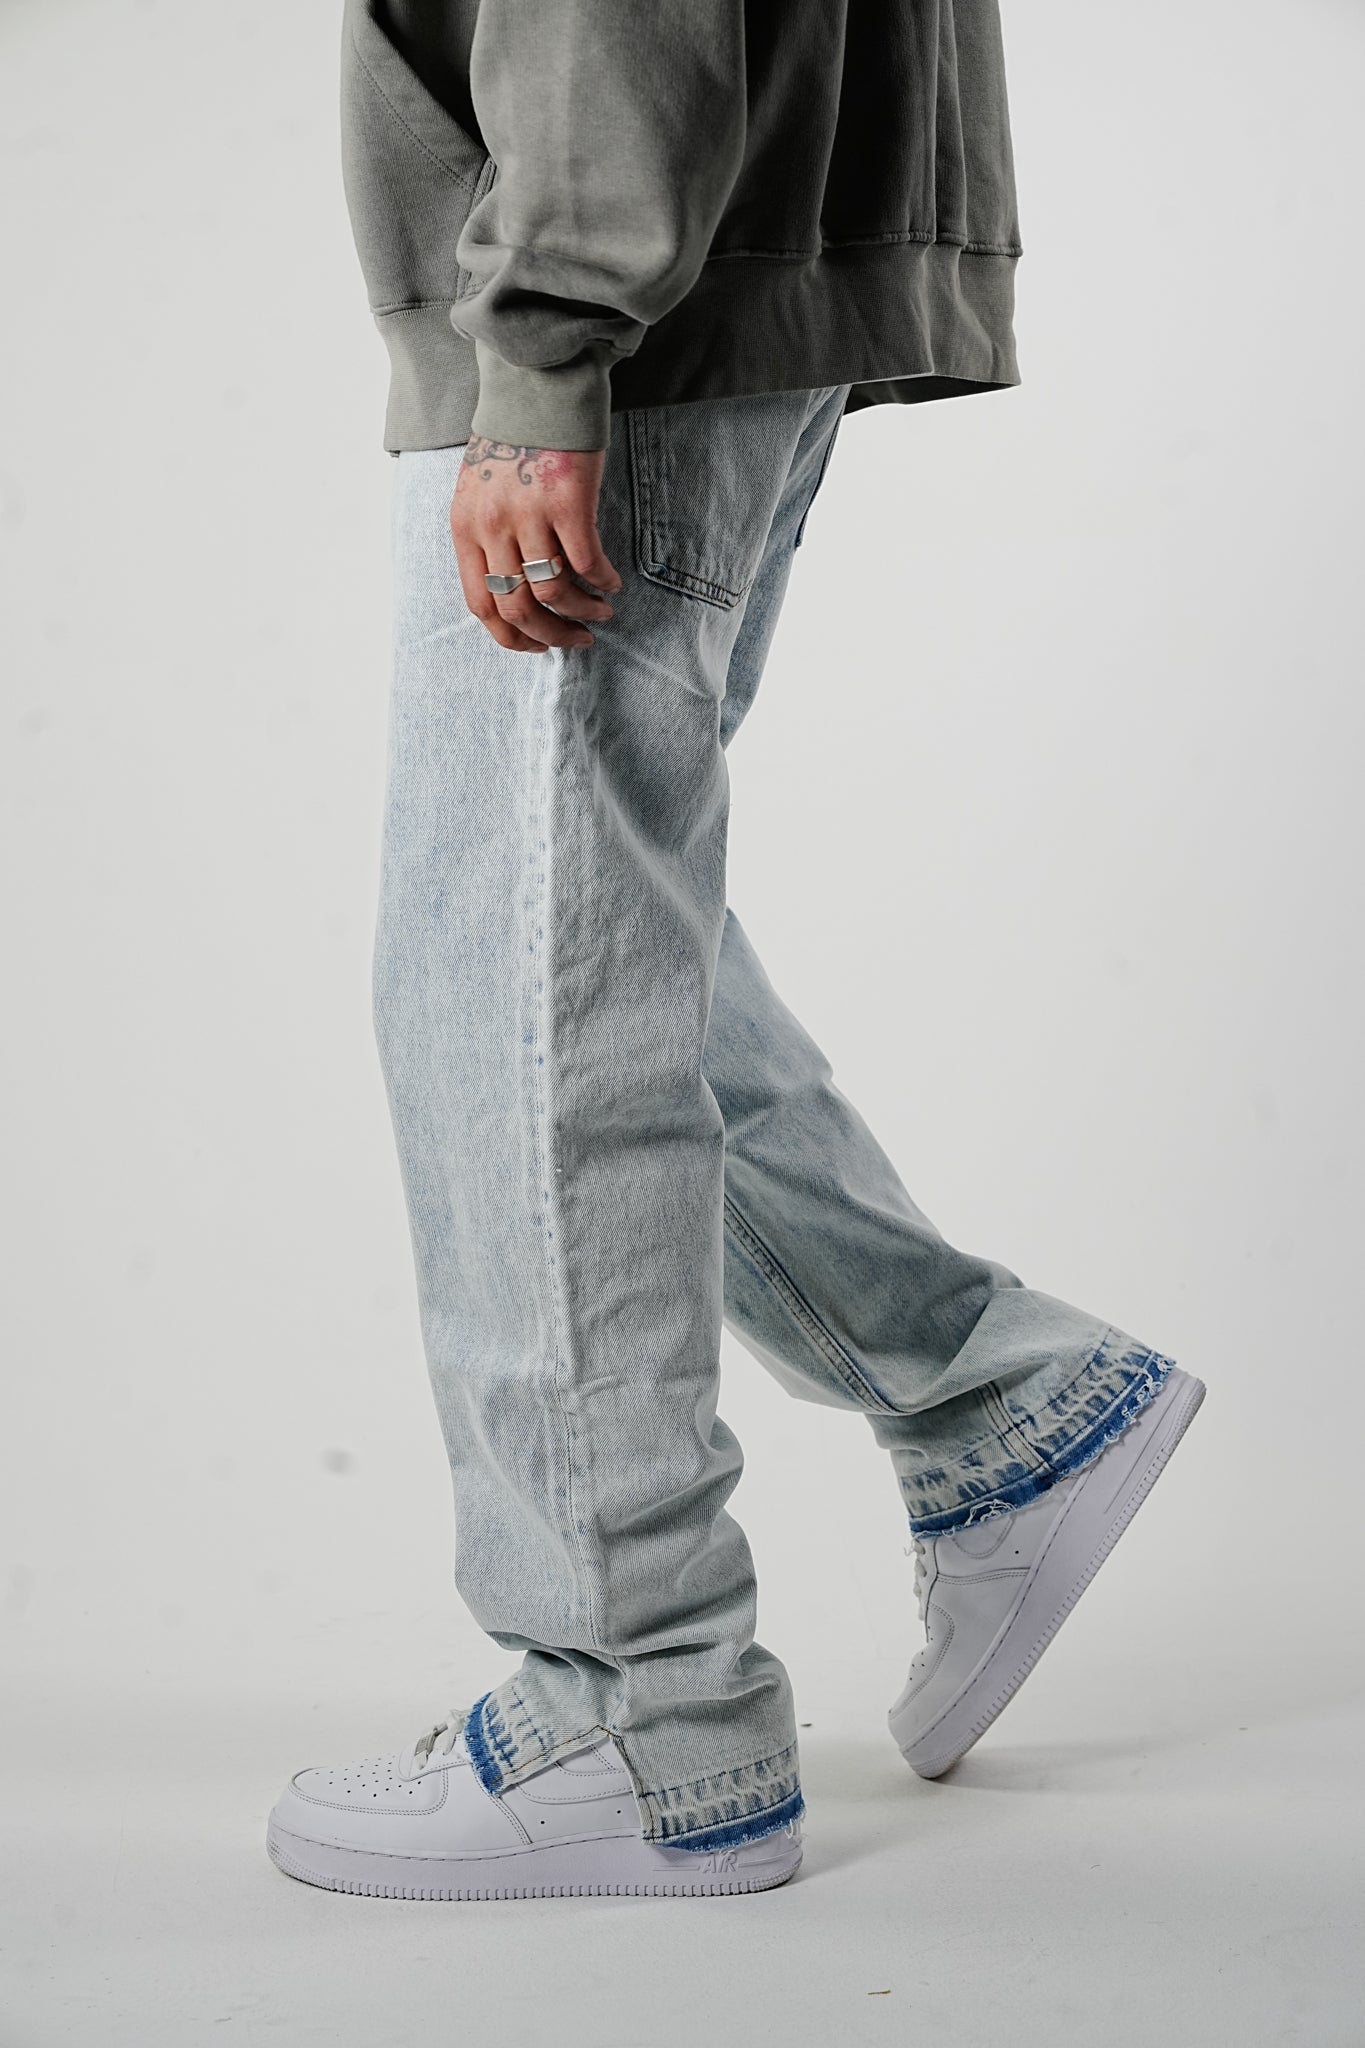 Premium Baggy Fit Destroyed Light Blue Jeans - UNEFFECTED STUDIOS® - JEANS - UNEFFECTED STUDIOS®